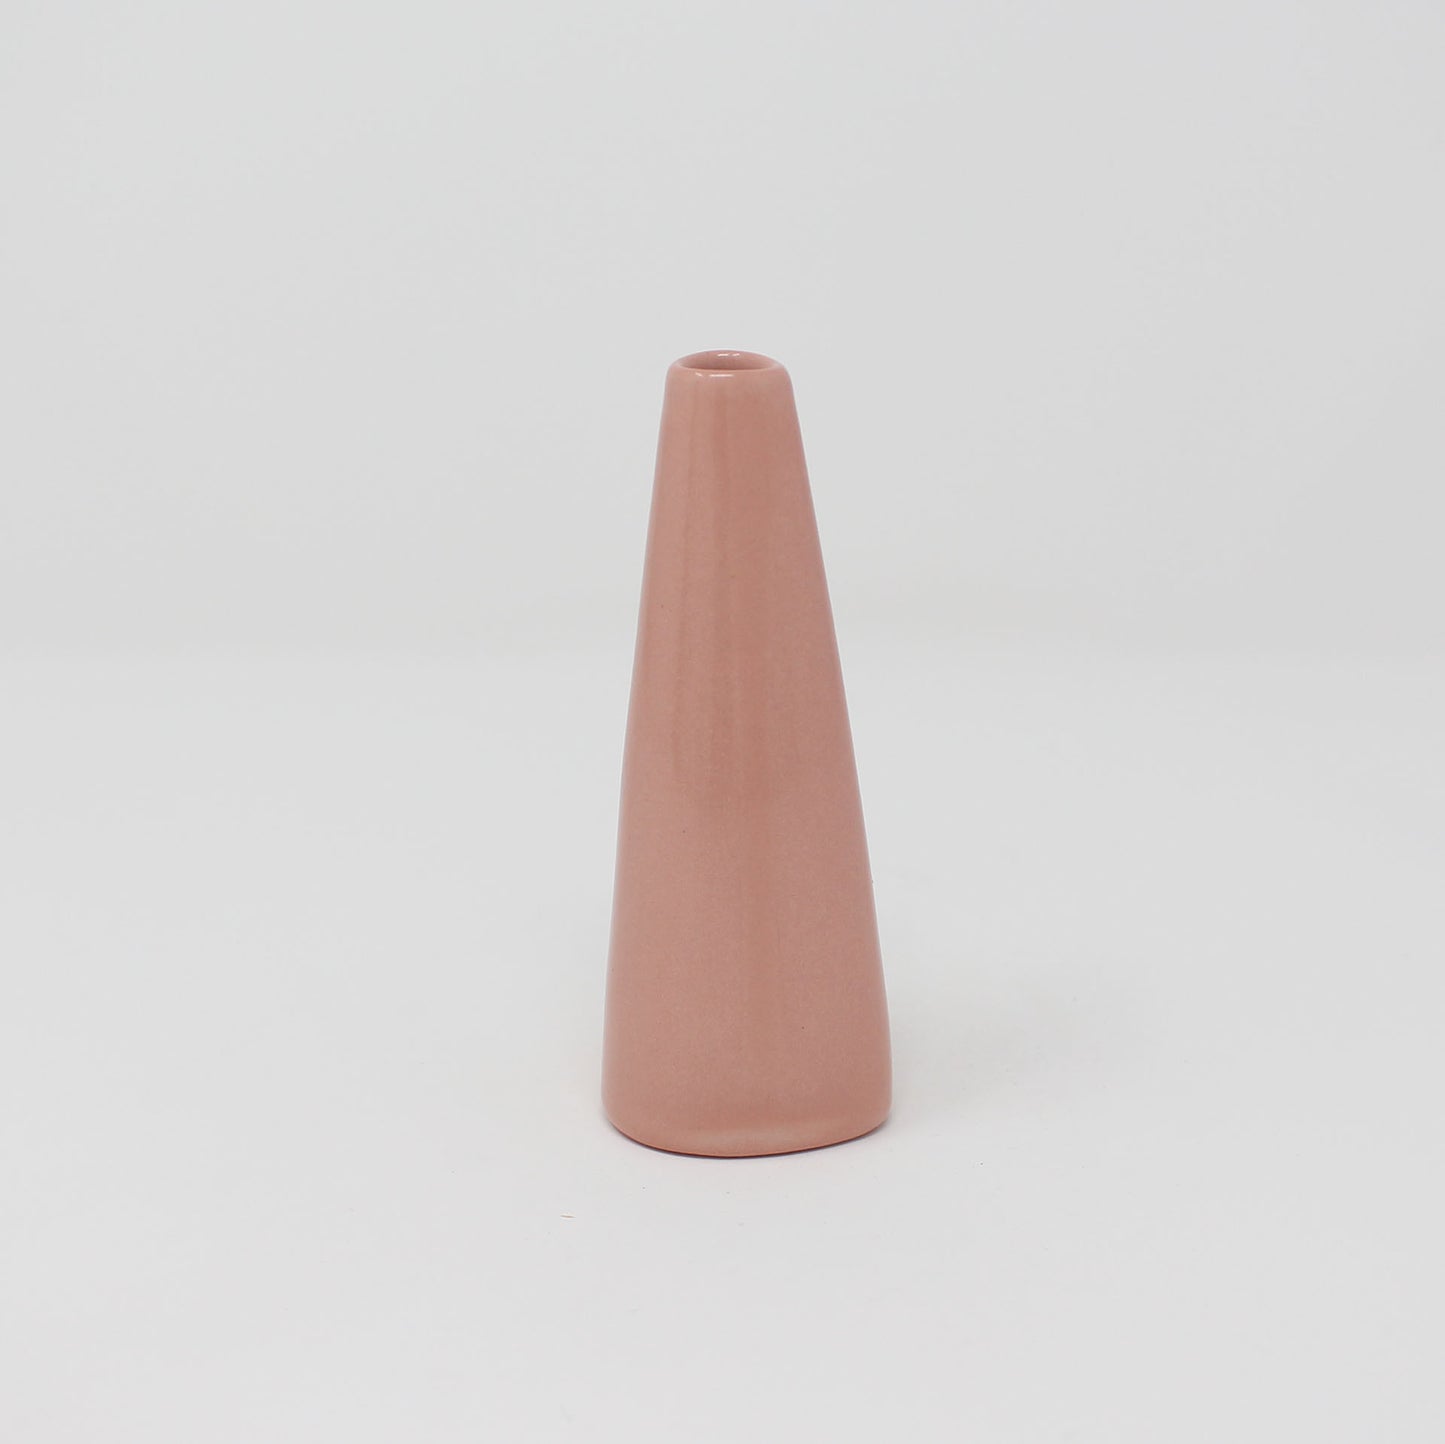 One Color : Vase No. 2 Small